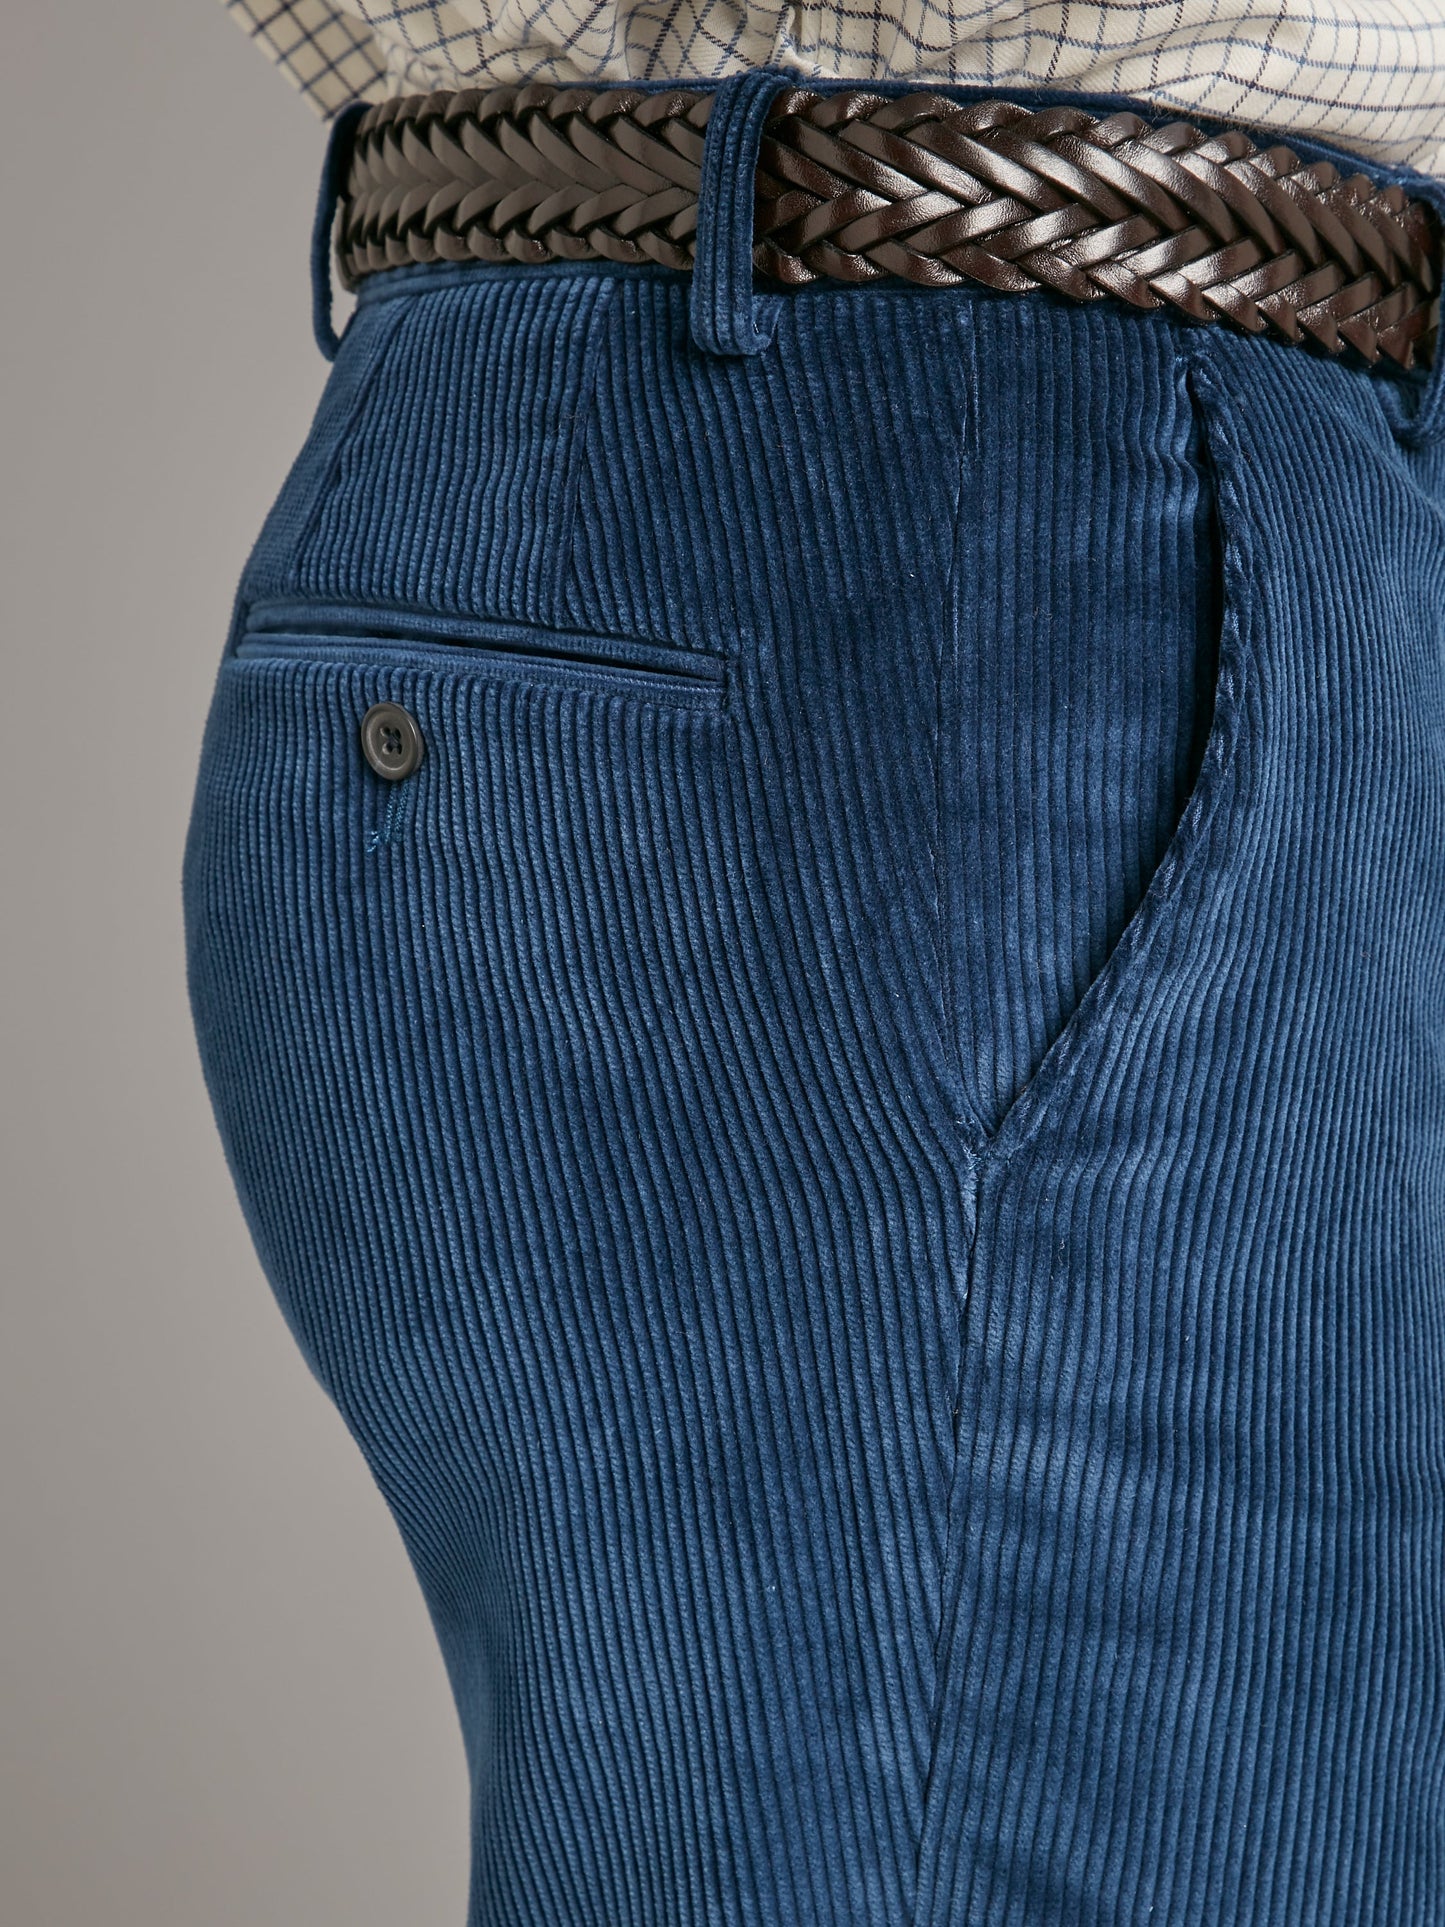 heavyweight corduroy trousers ink blue 3